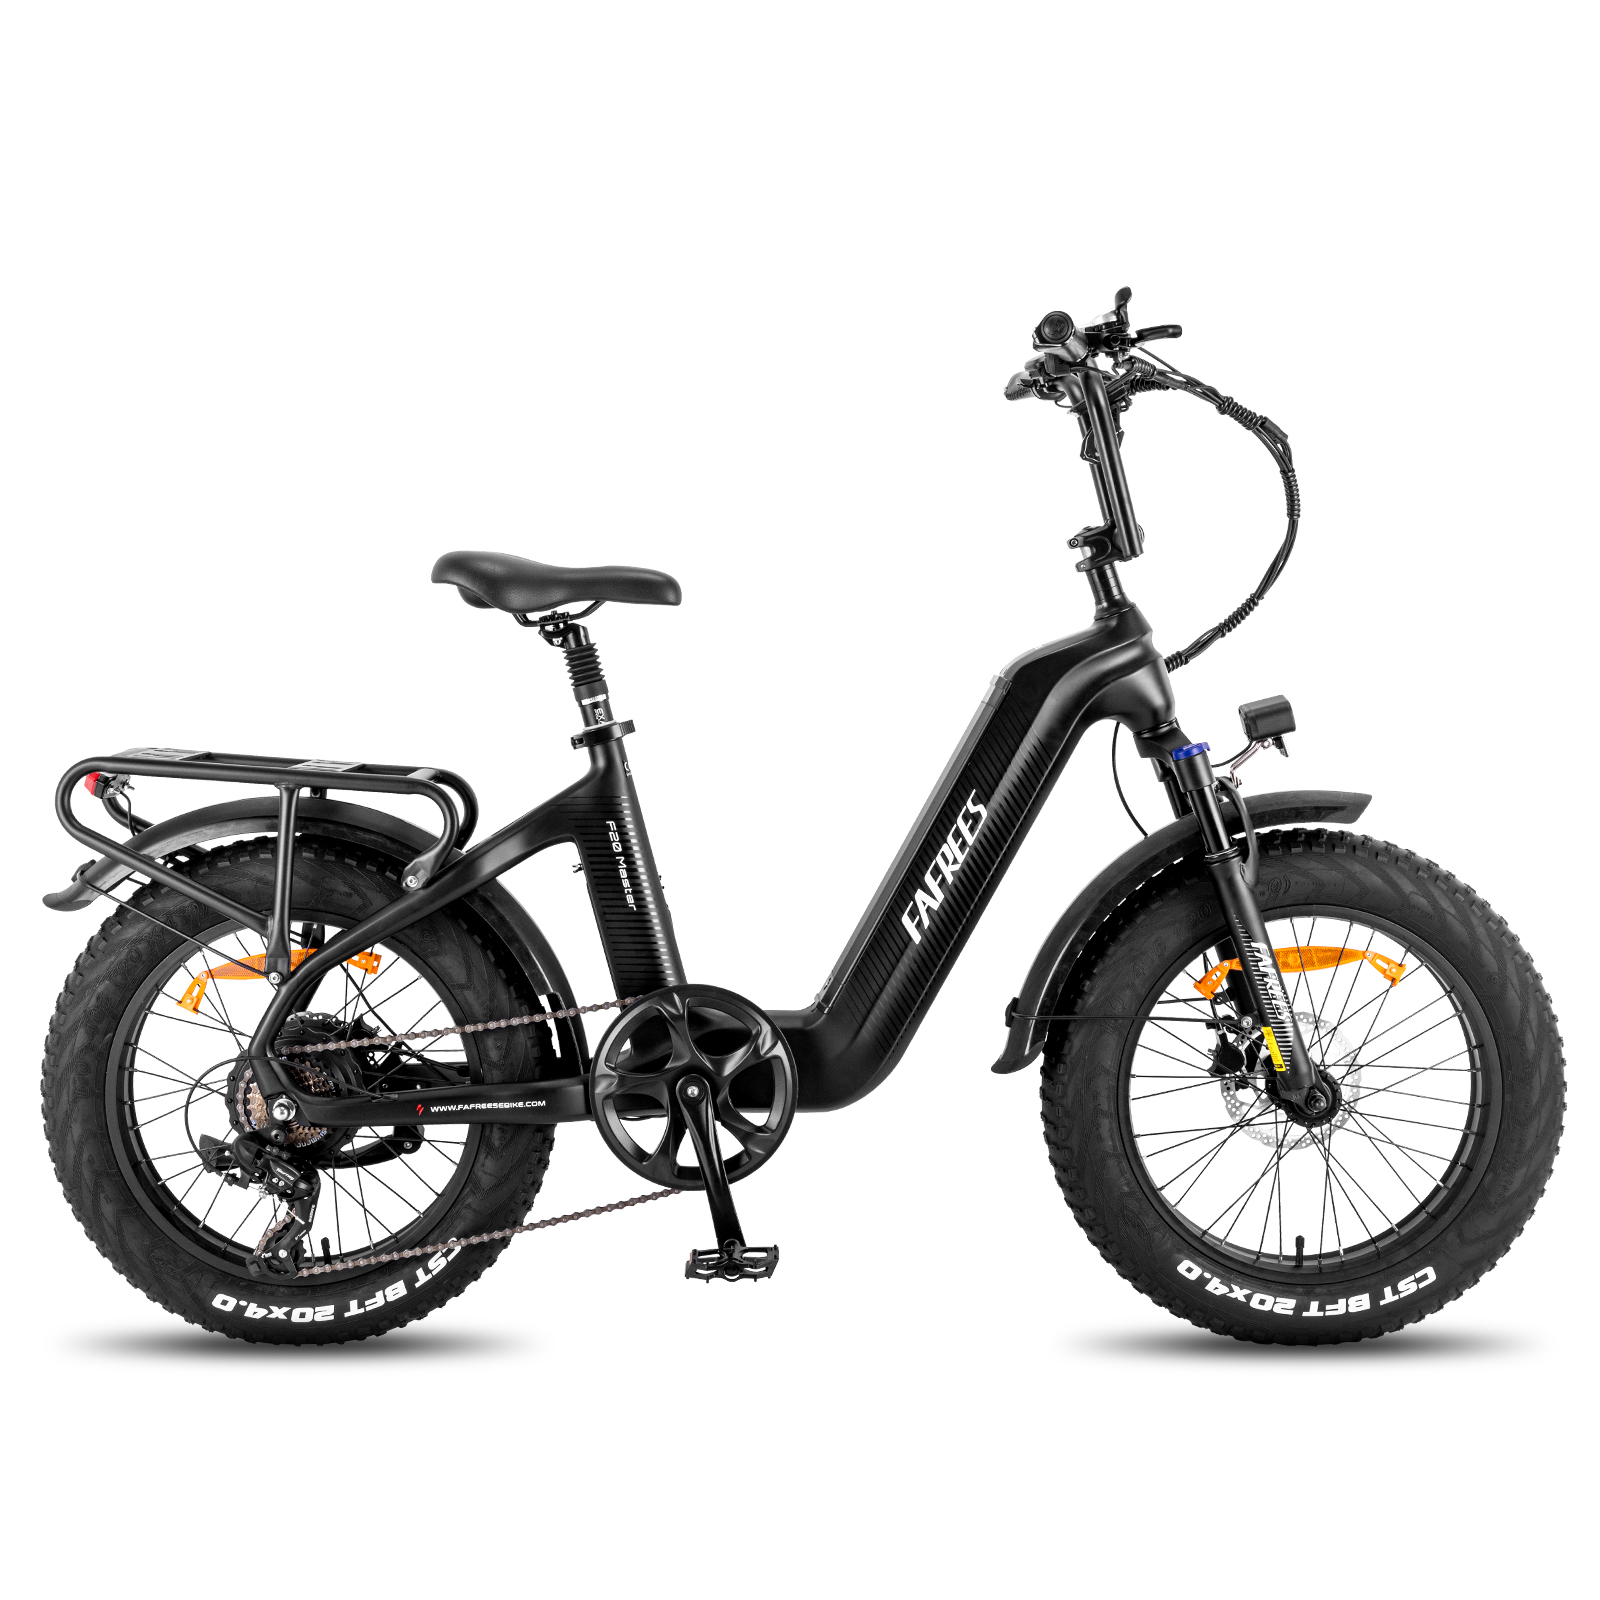 FAFREES (Laufradgröße: Unisex-Rad, All Bike Terrain E-bike Zoll, 20 Schwarz) (ATB)